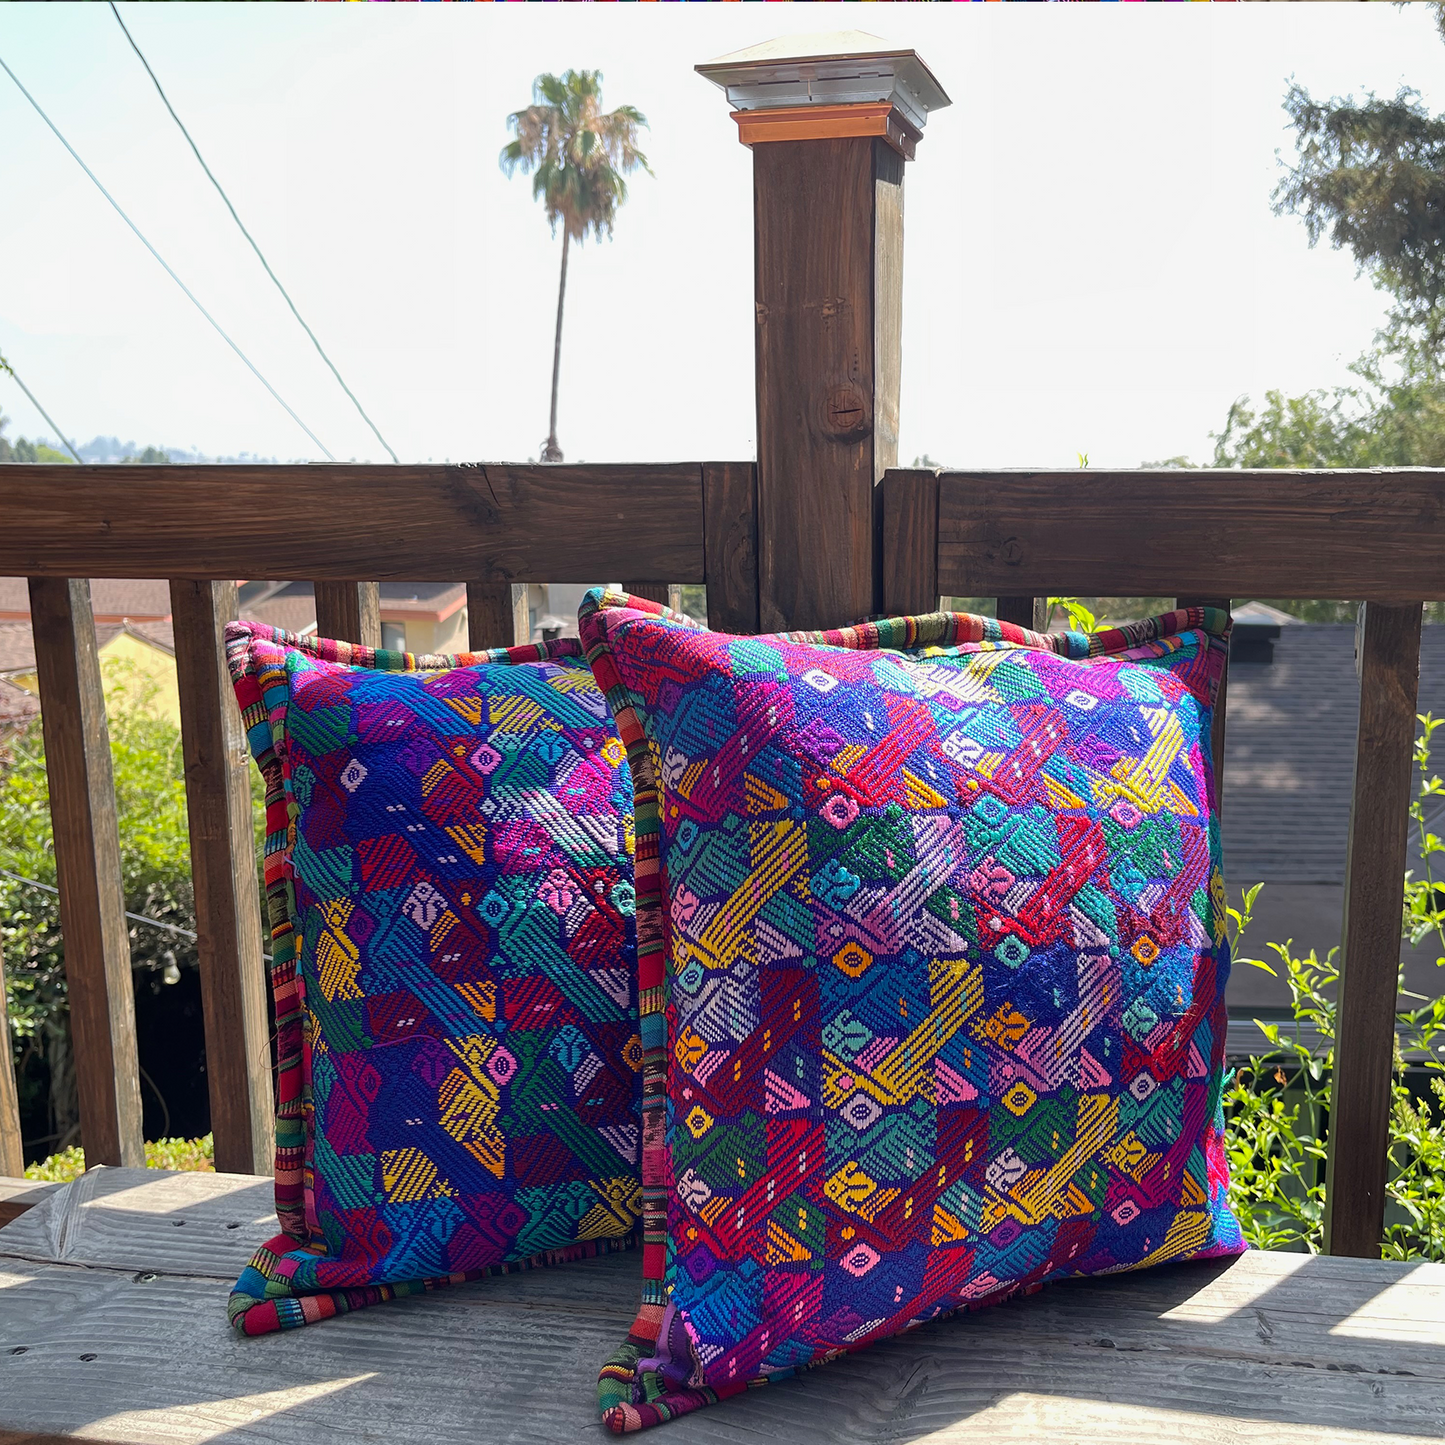 Guatemalan Huipil pillow covers from Concepcion Chiquirichapa